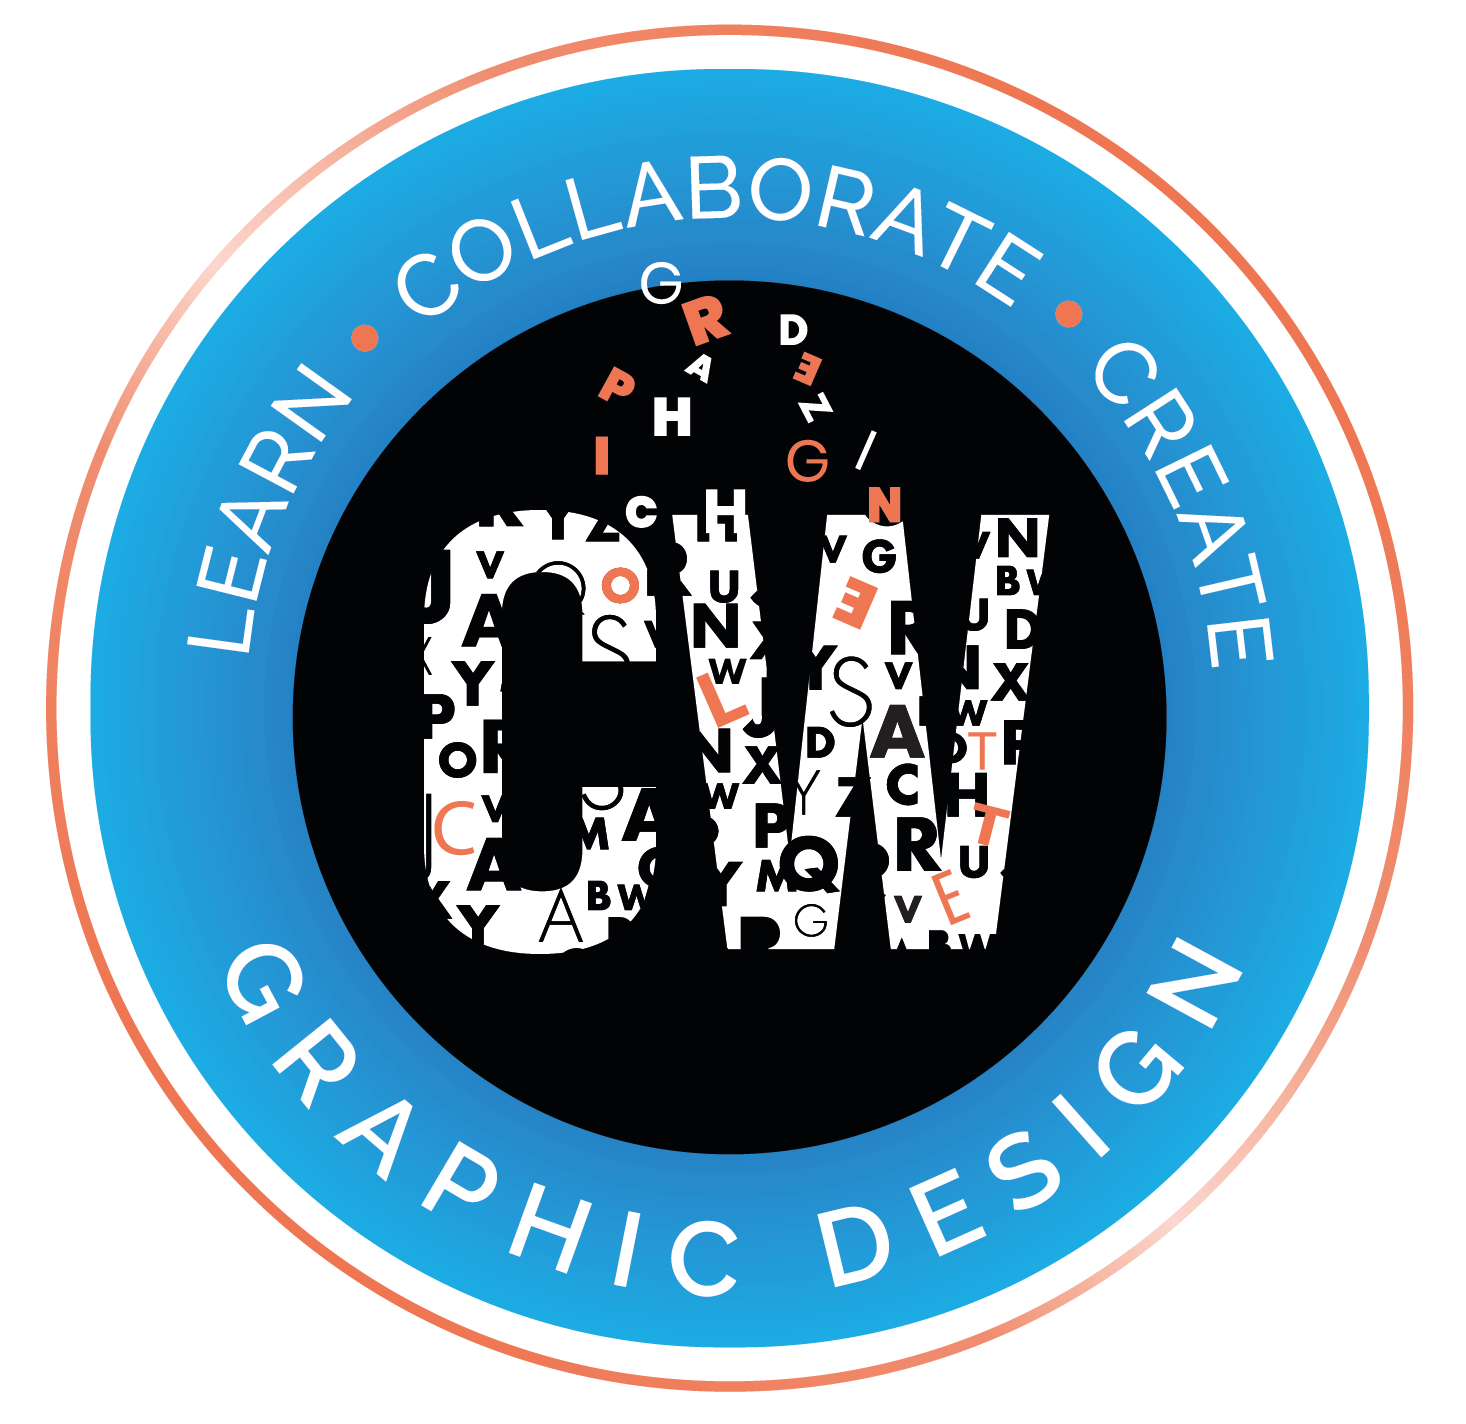 Web and Graphic Design